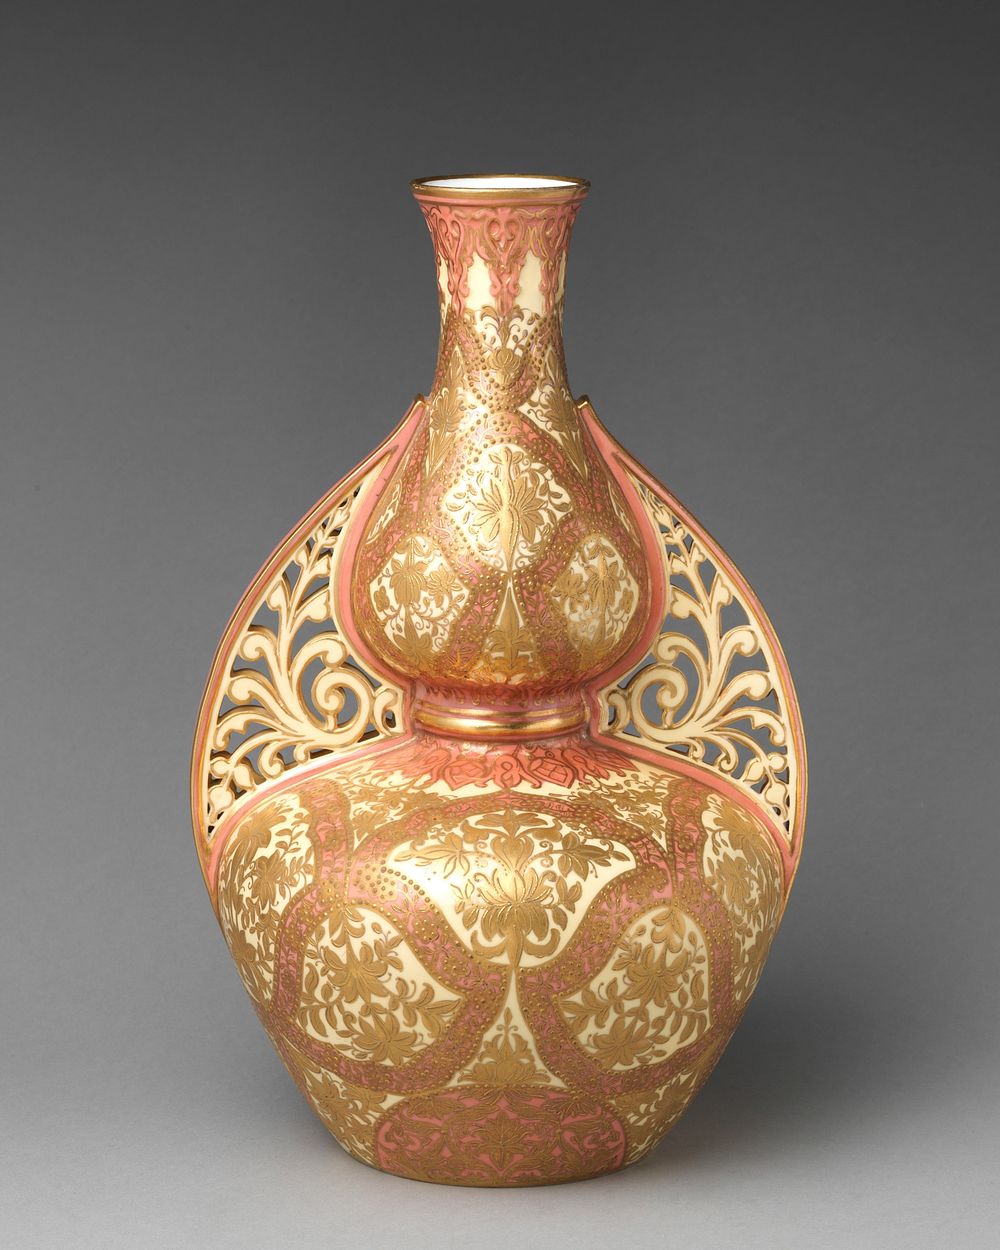 Islamic-style jar with pierced handles